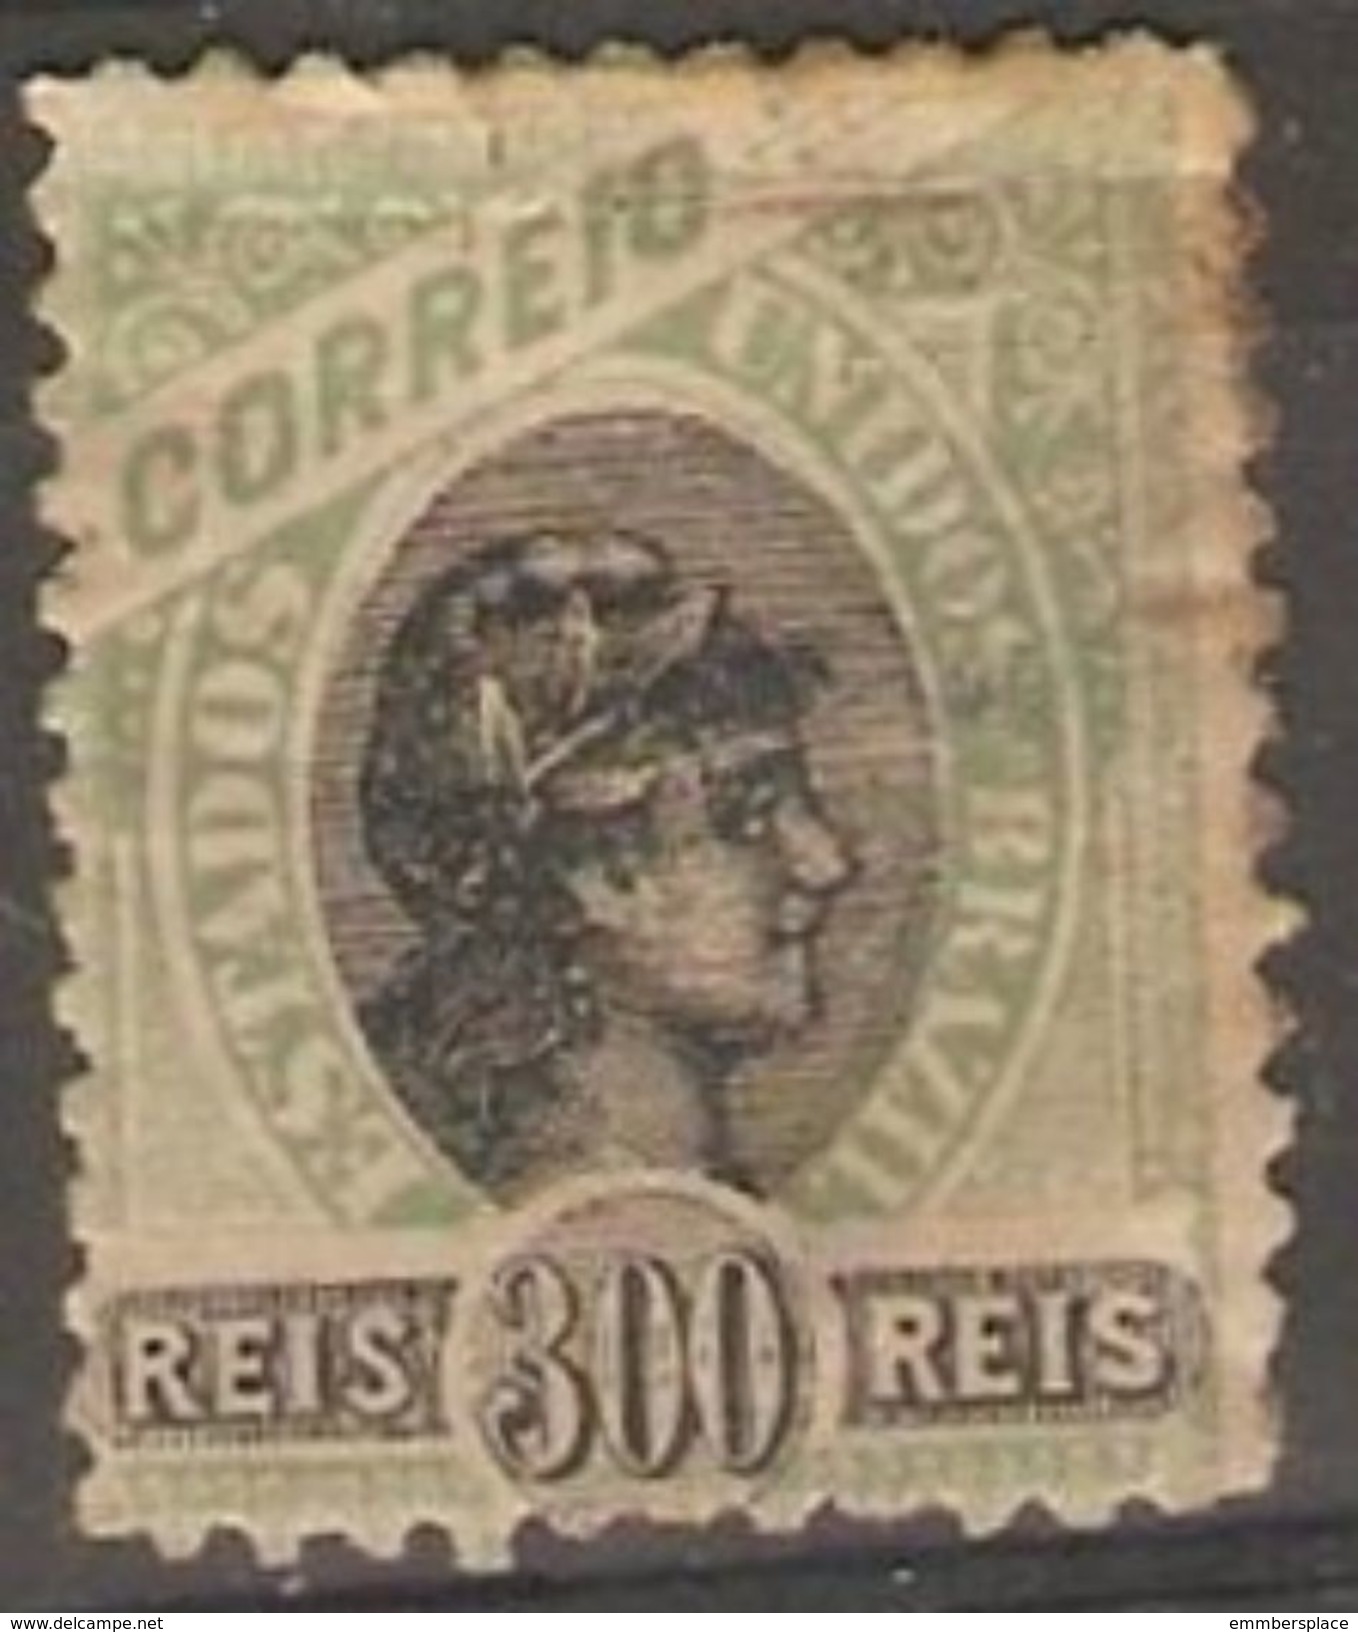 Brazil - 1894 Liberty Head 300r  MH   SG 129 (see Description) - Unused Stamps